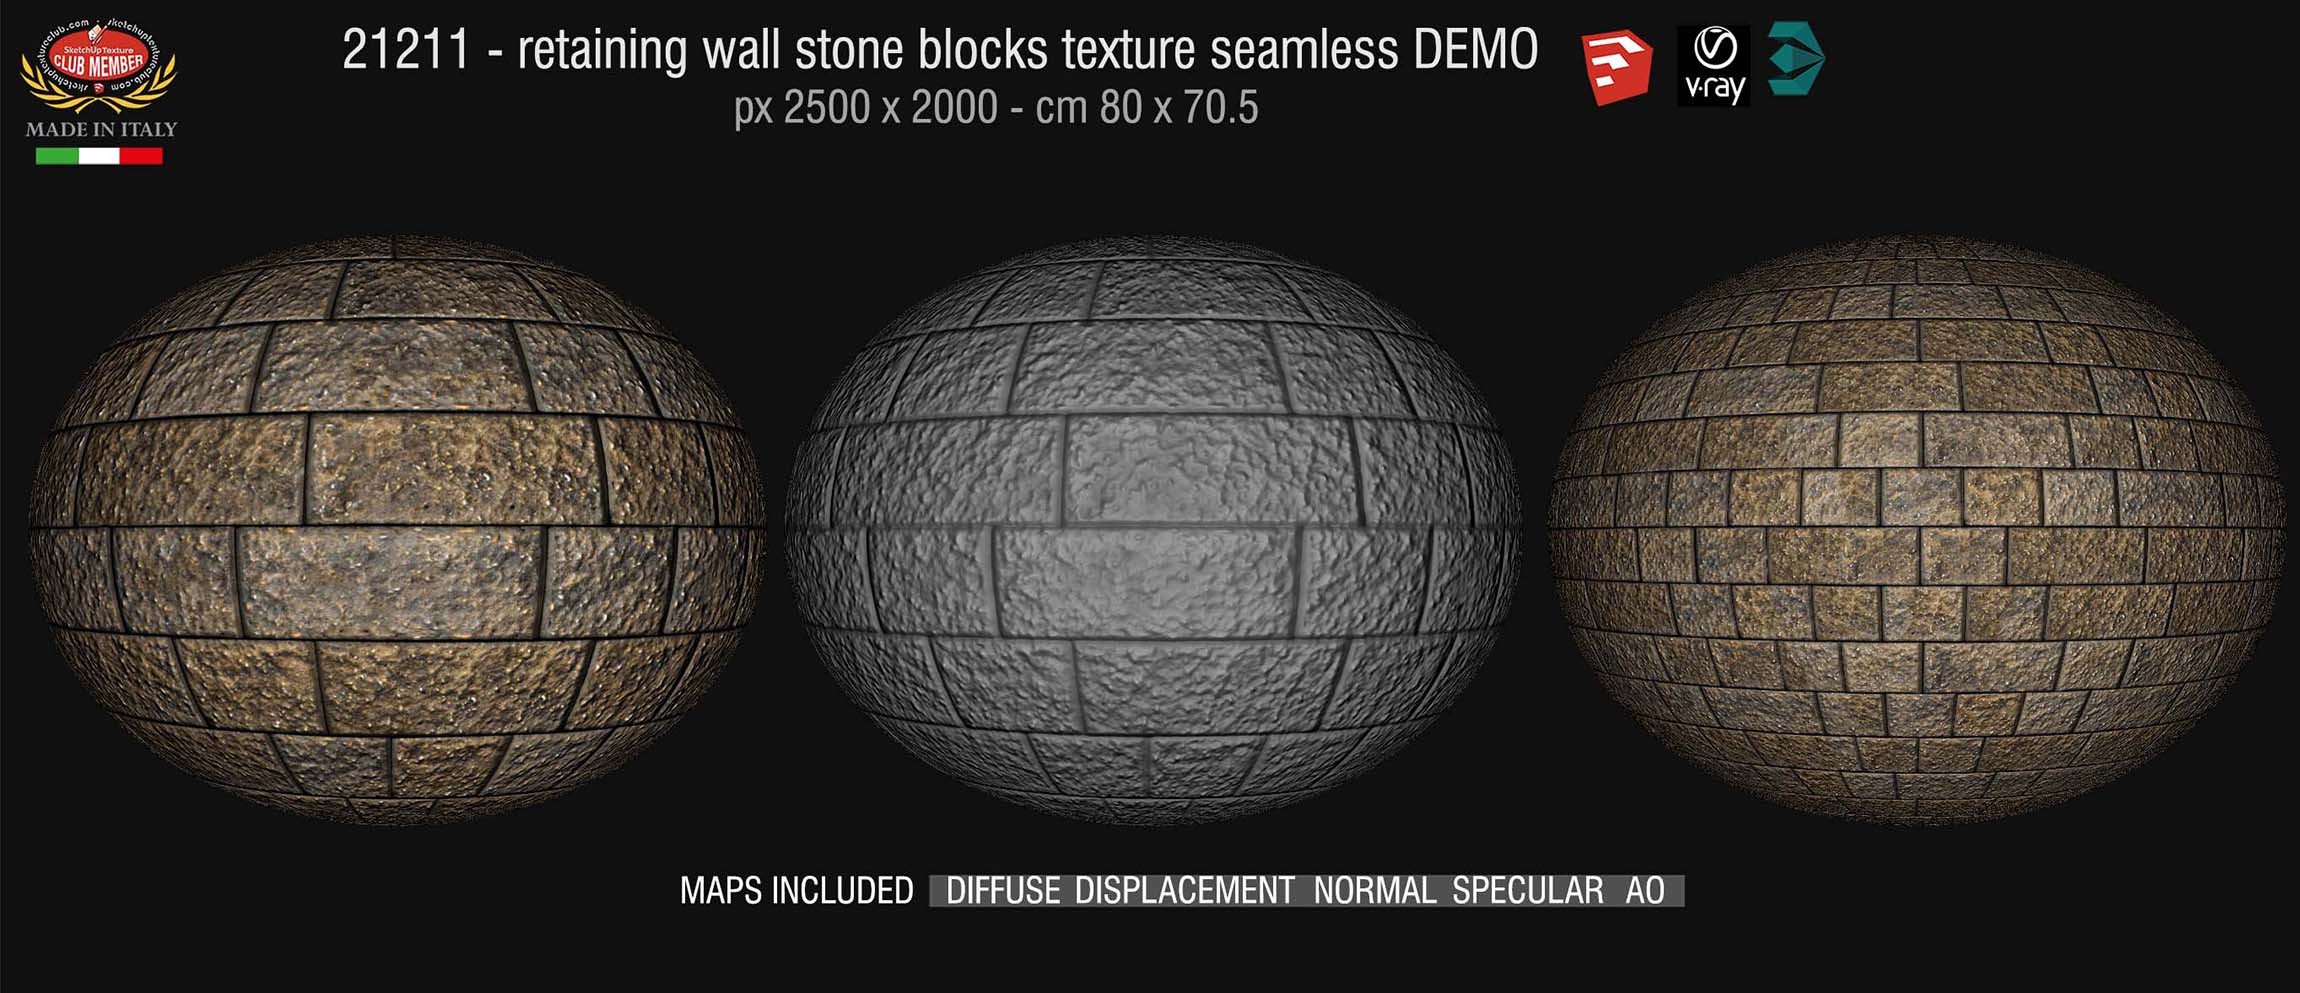 21211 HR Retaining wall stone blocks texture + maps DEMO